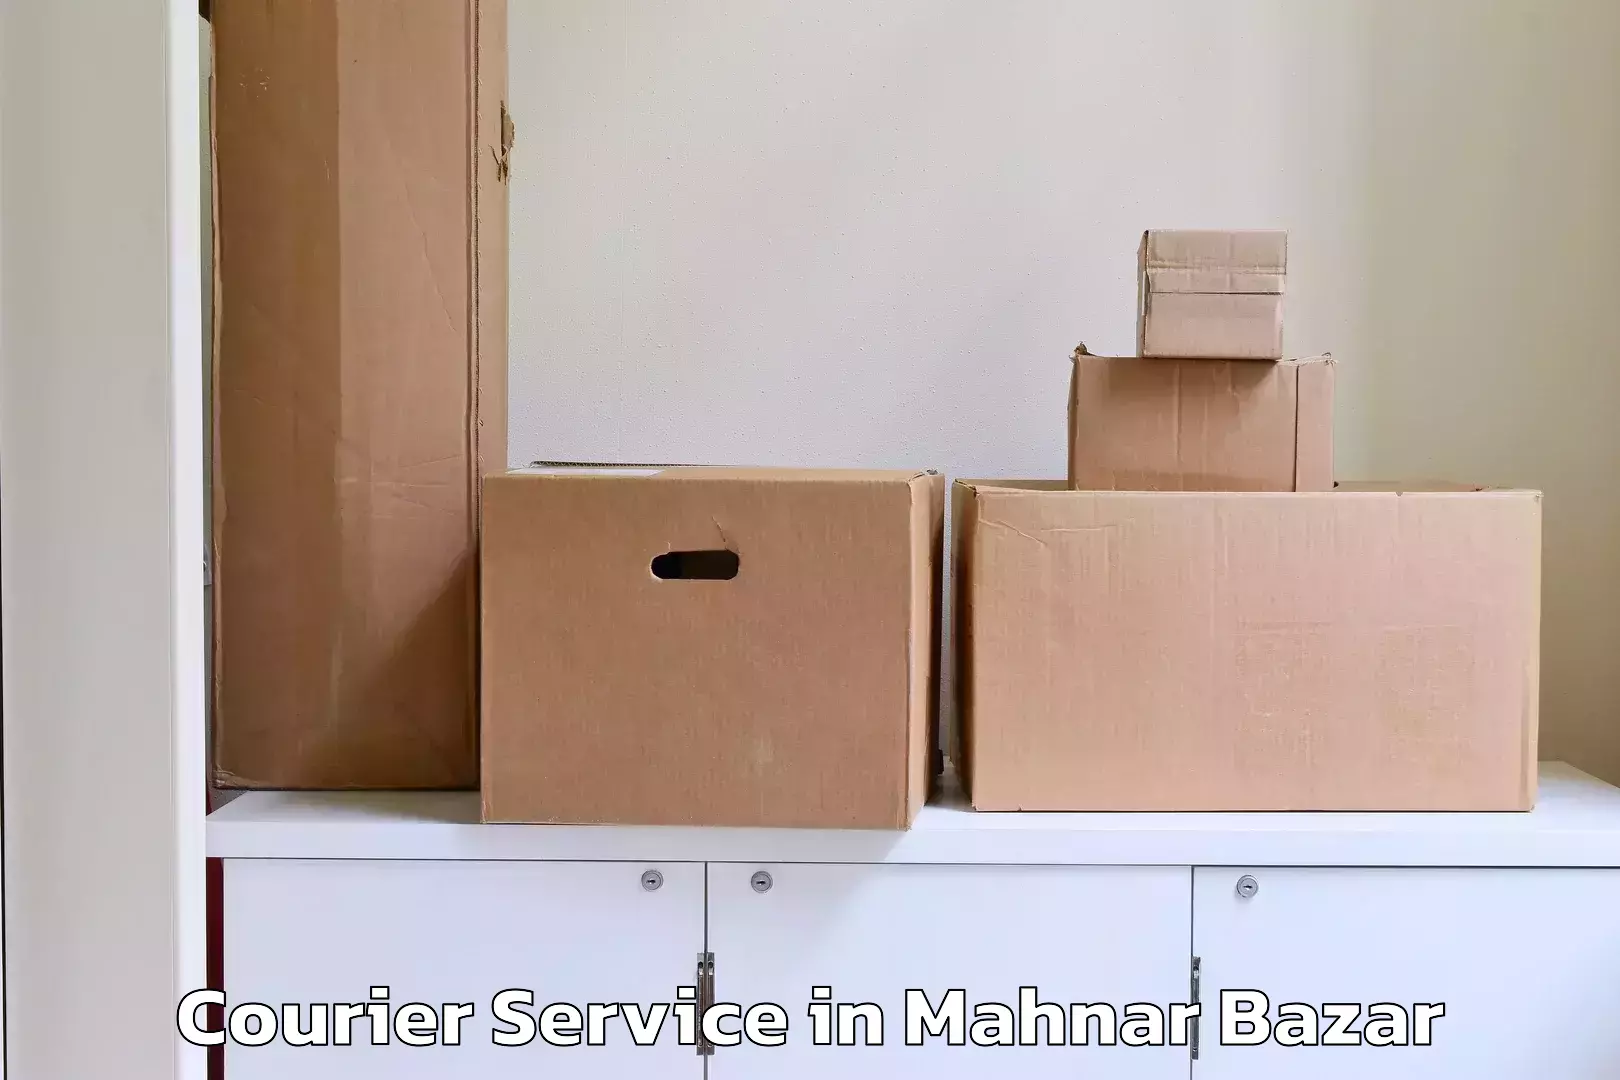 Efficient parcel transport in Mahnar Bazar